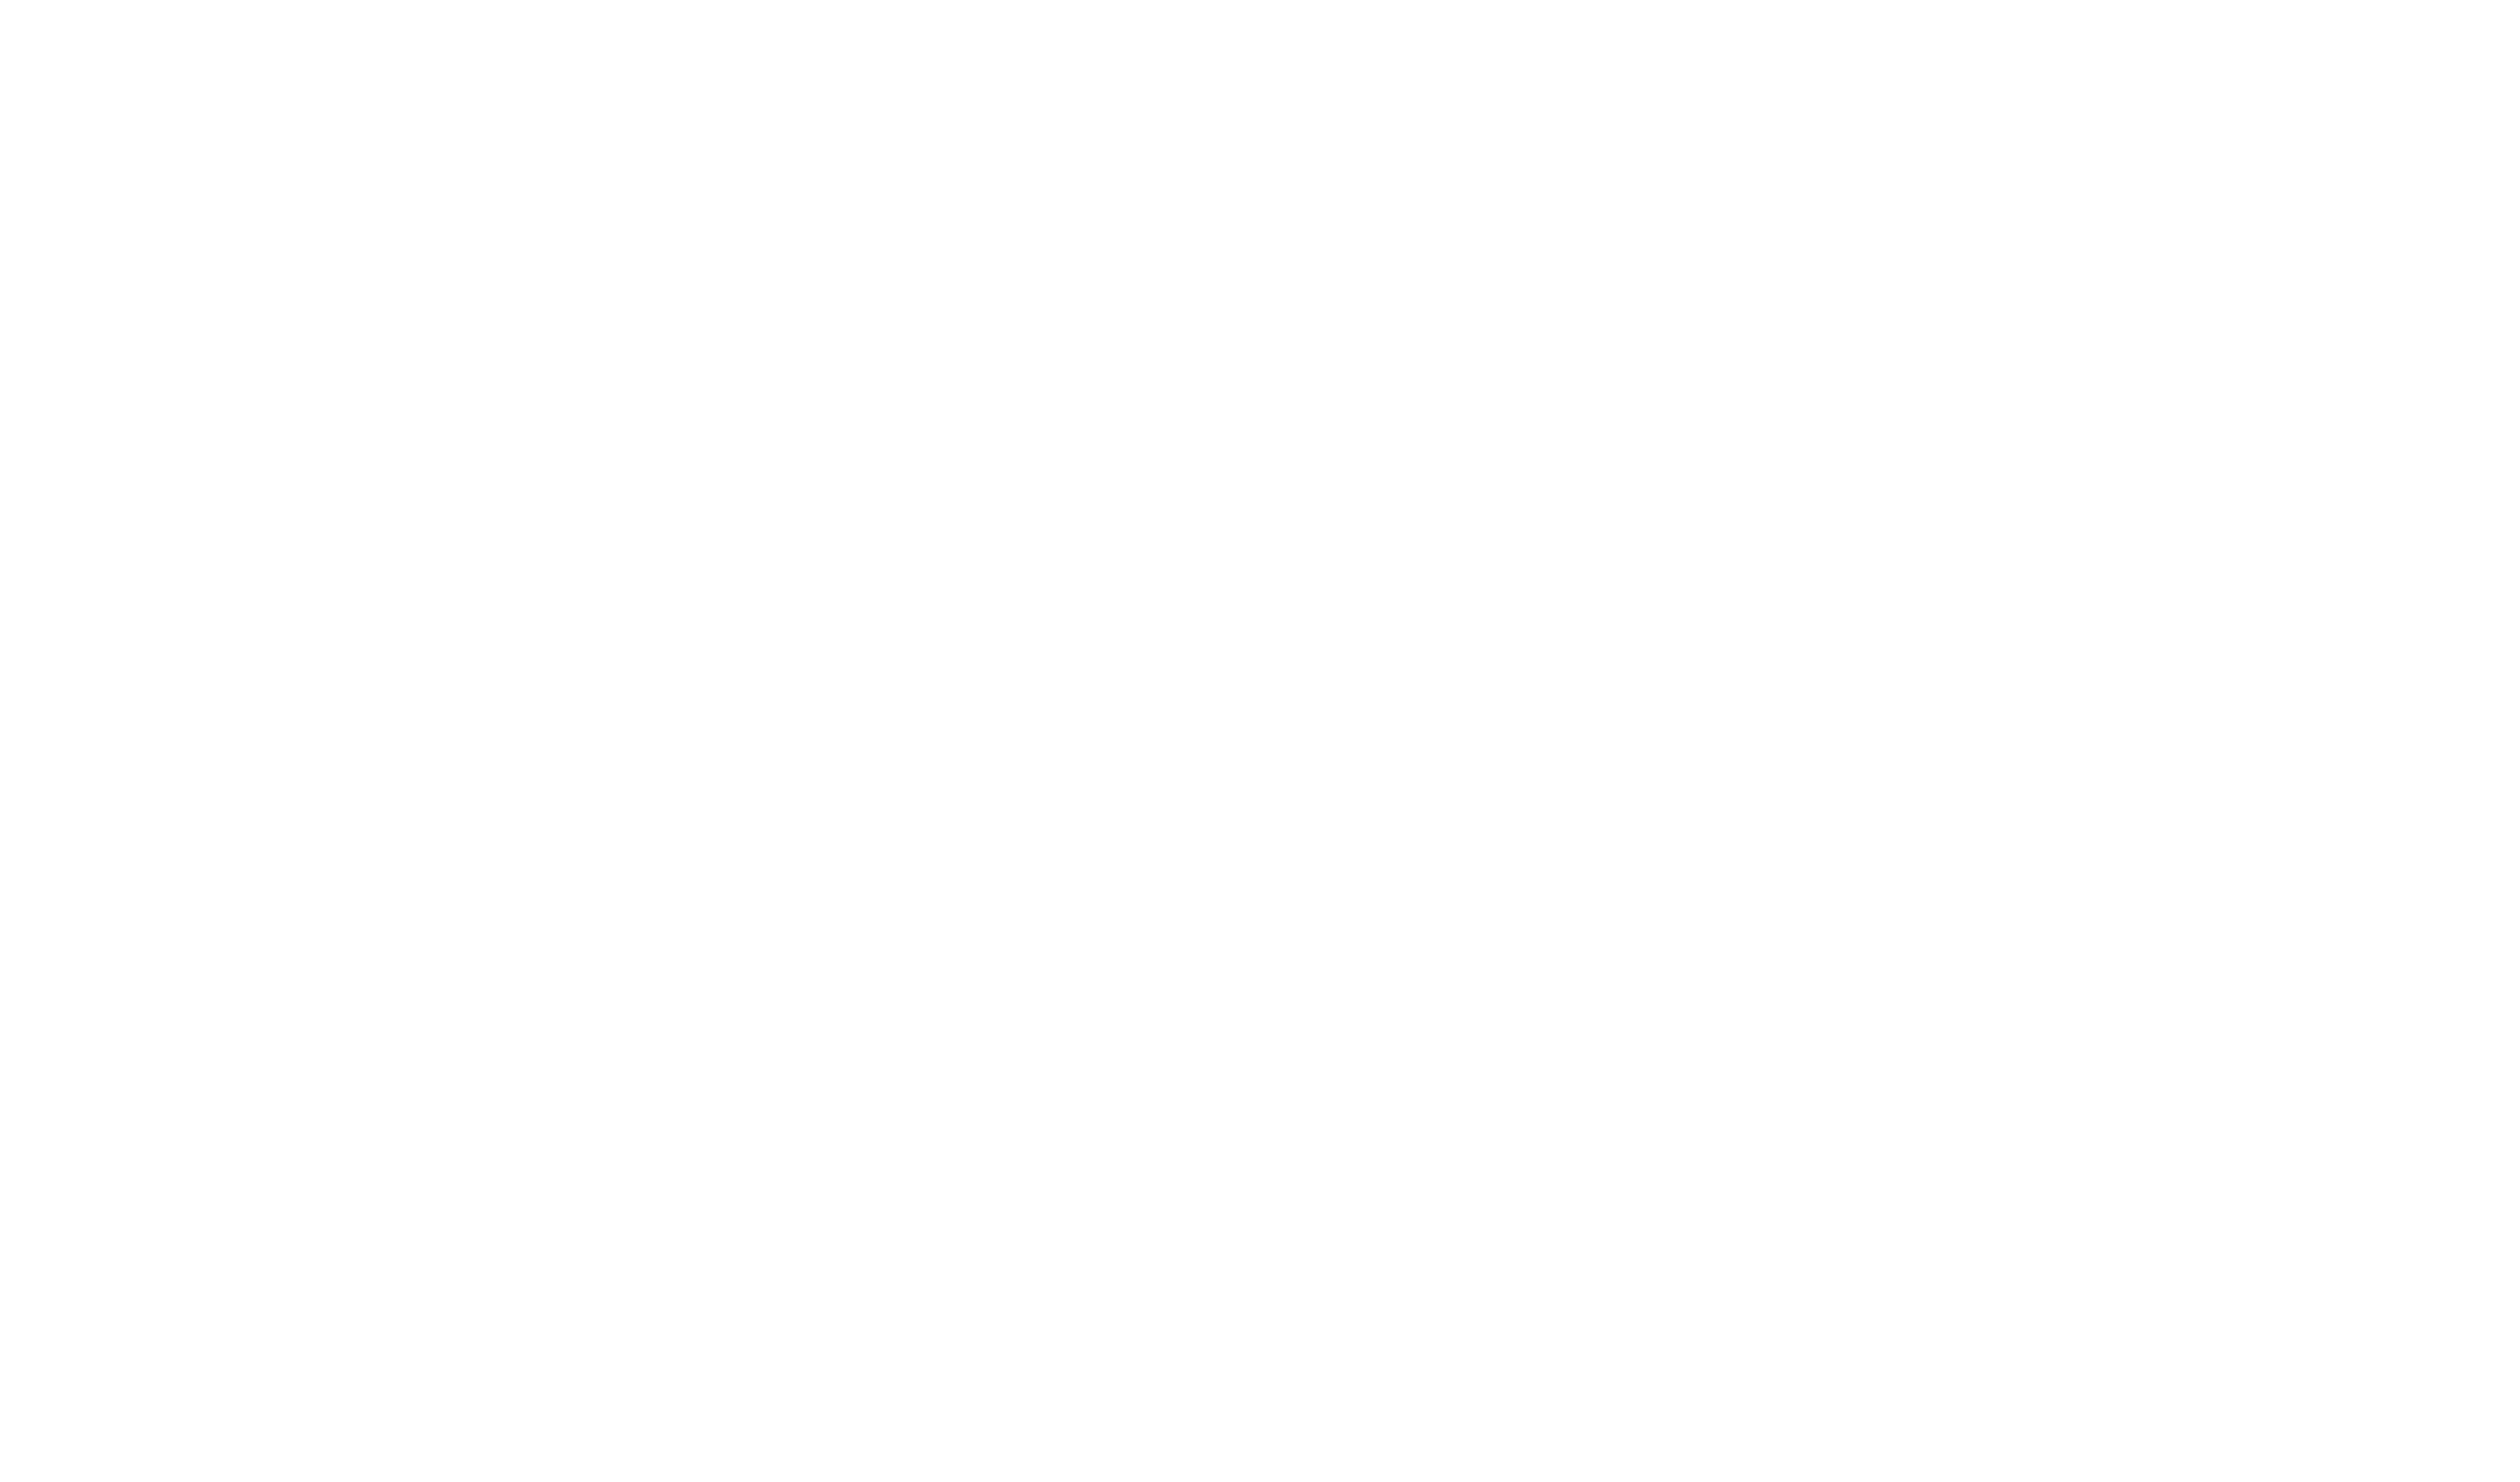 Symbol of heart and company name BCB medical